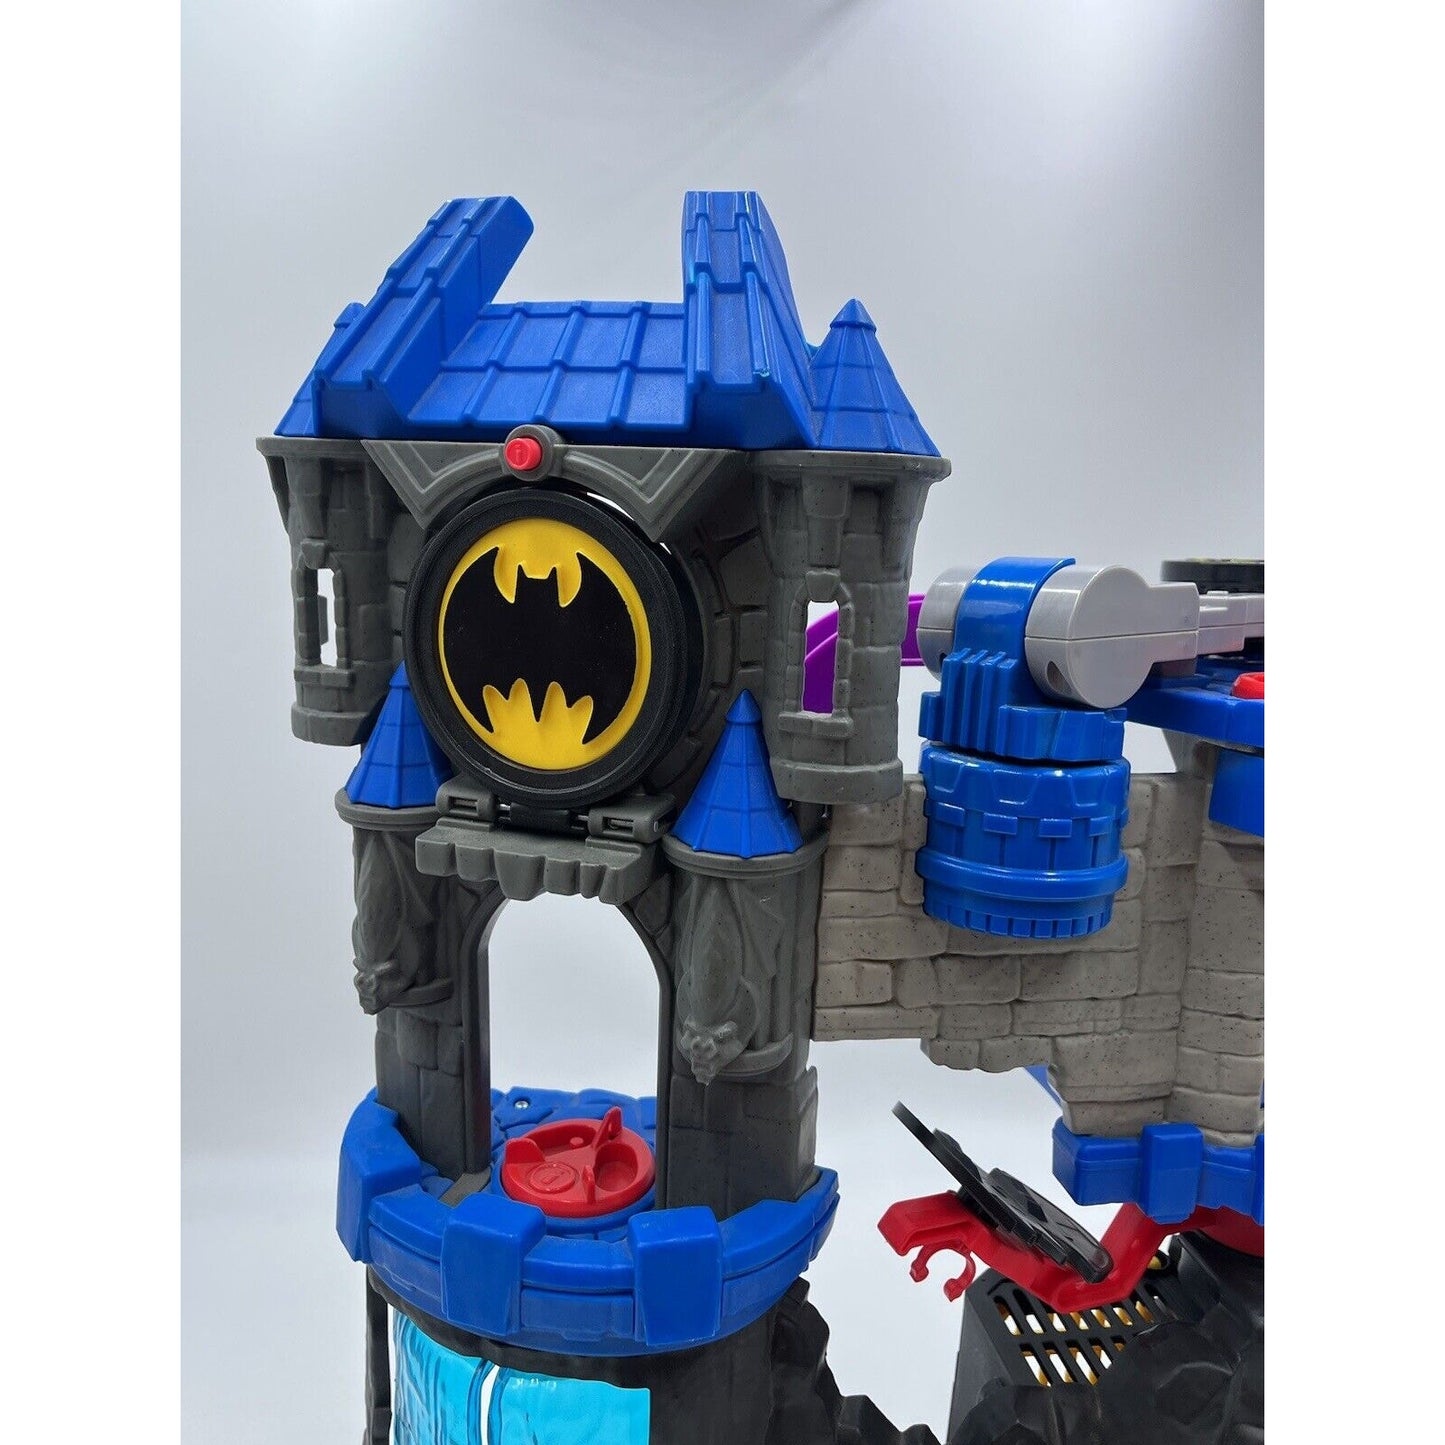 Fisher-Price Imaginext Wayne Manor Batcave Playset w/ Figures